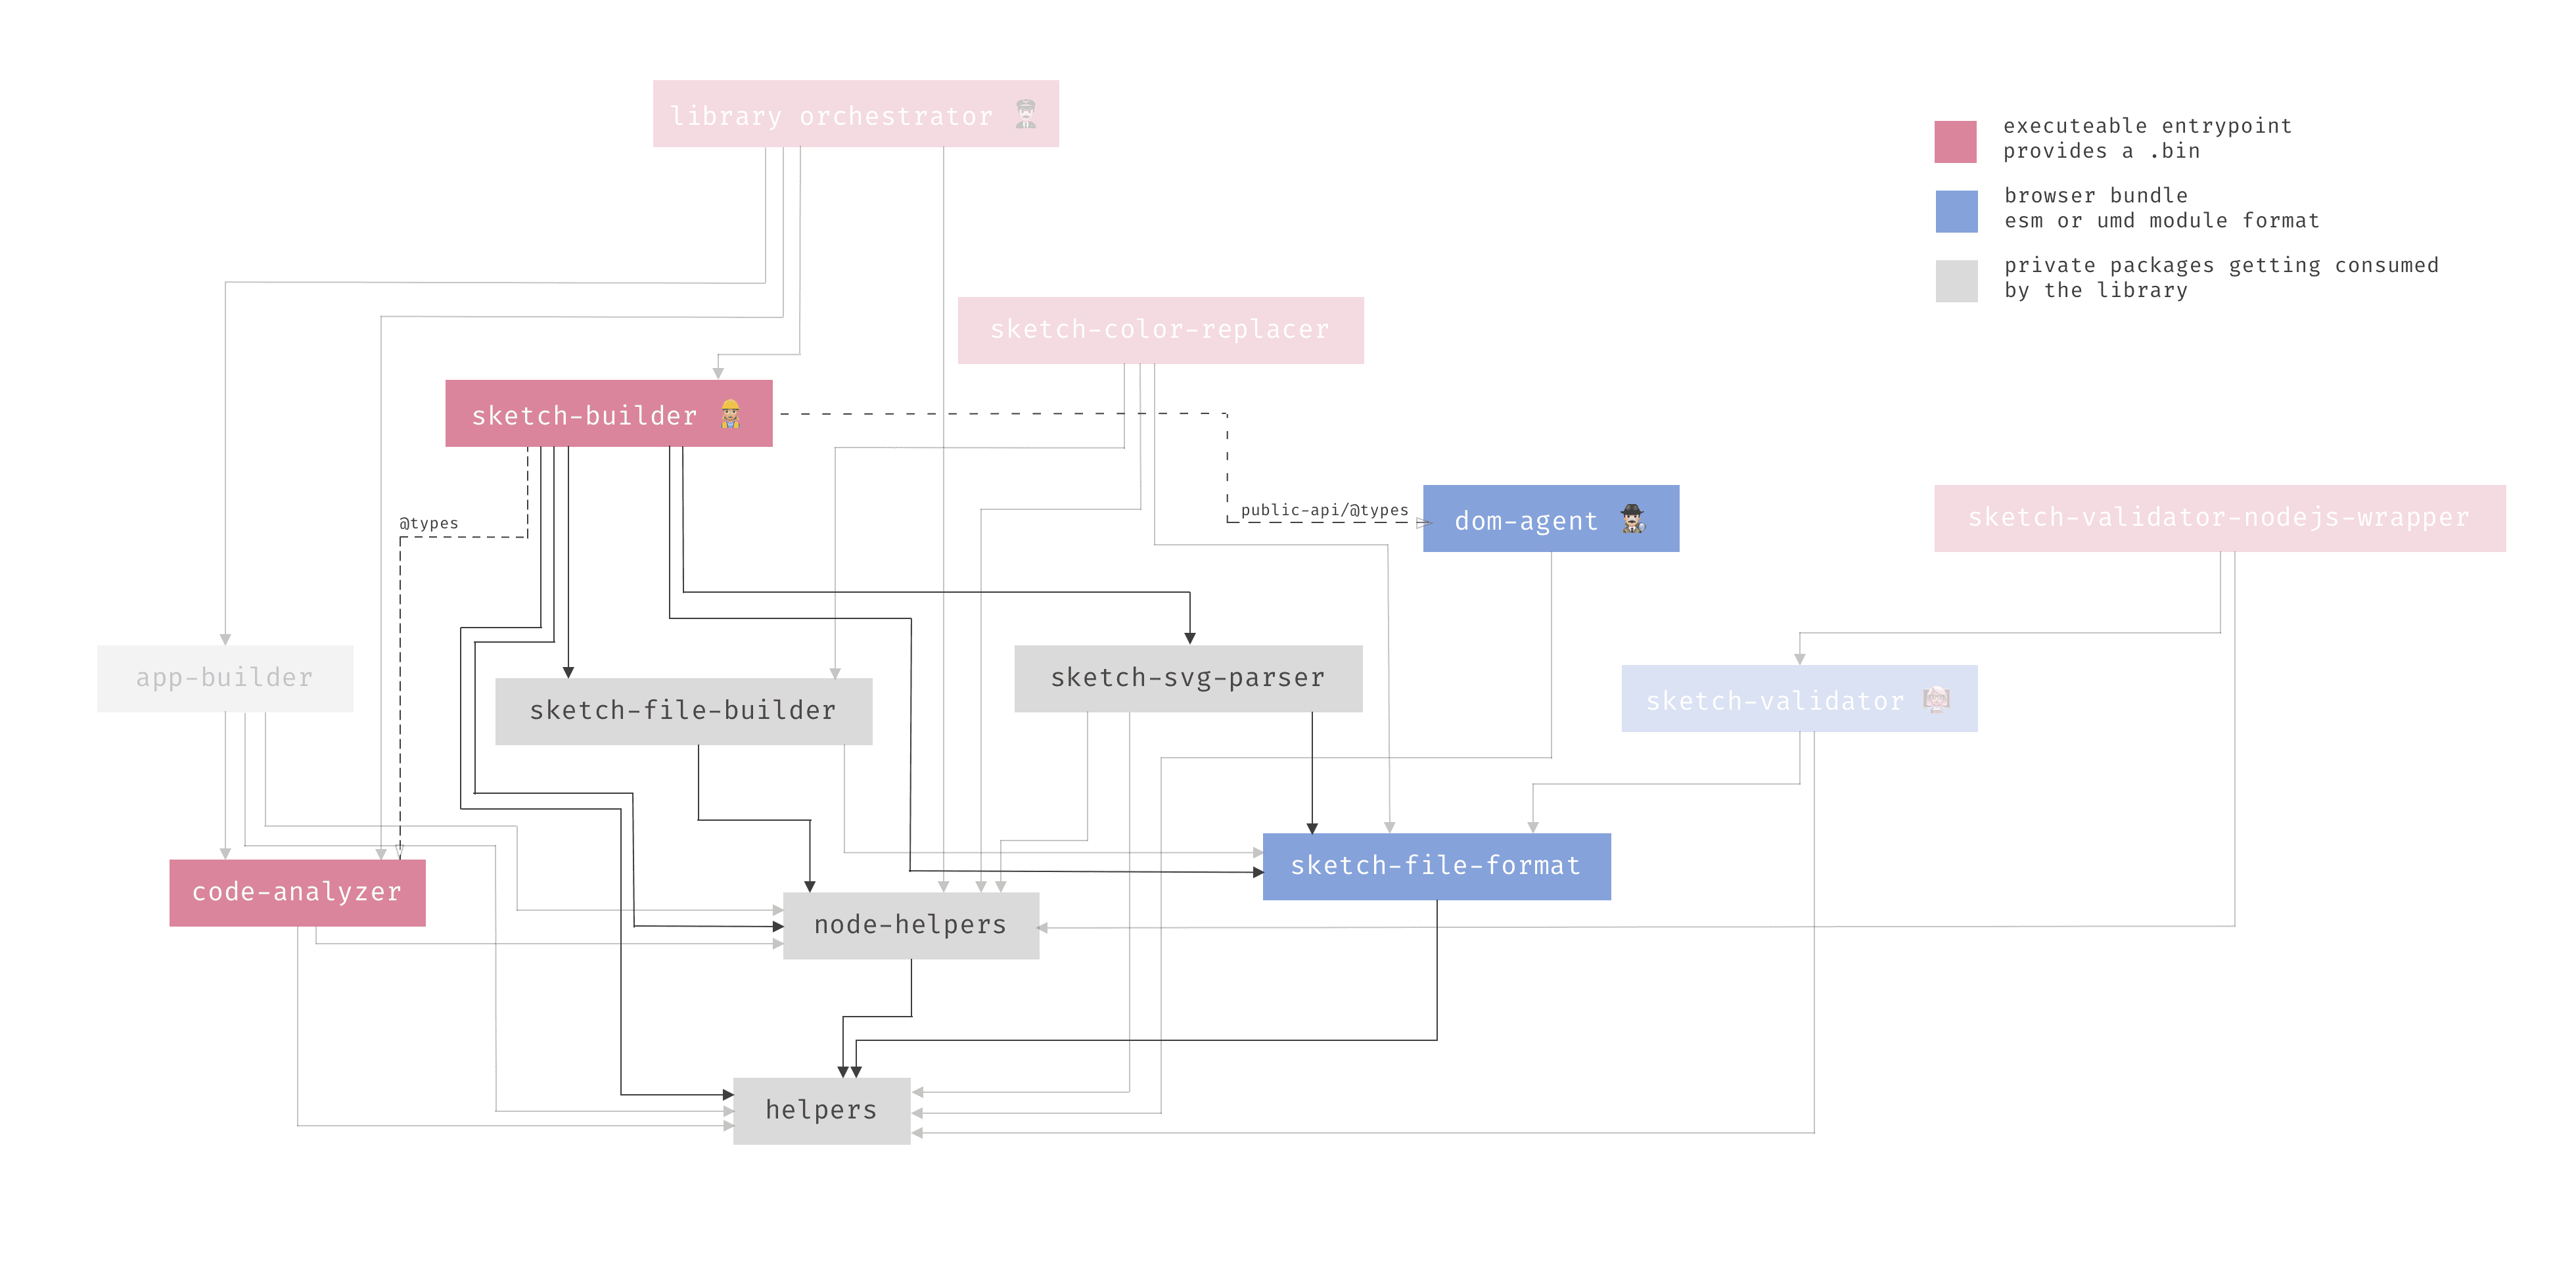 Dependency graph of the sketchmine sketch-builder